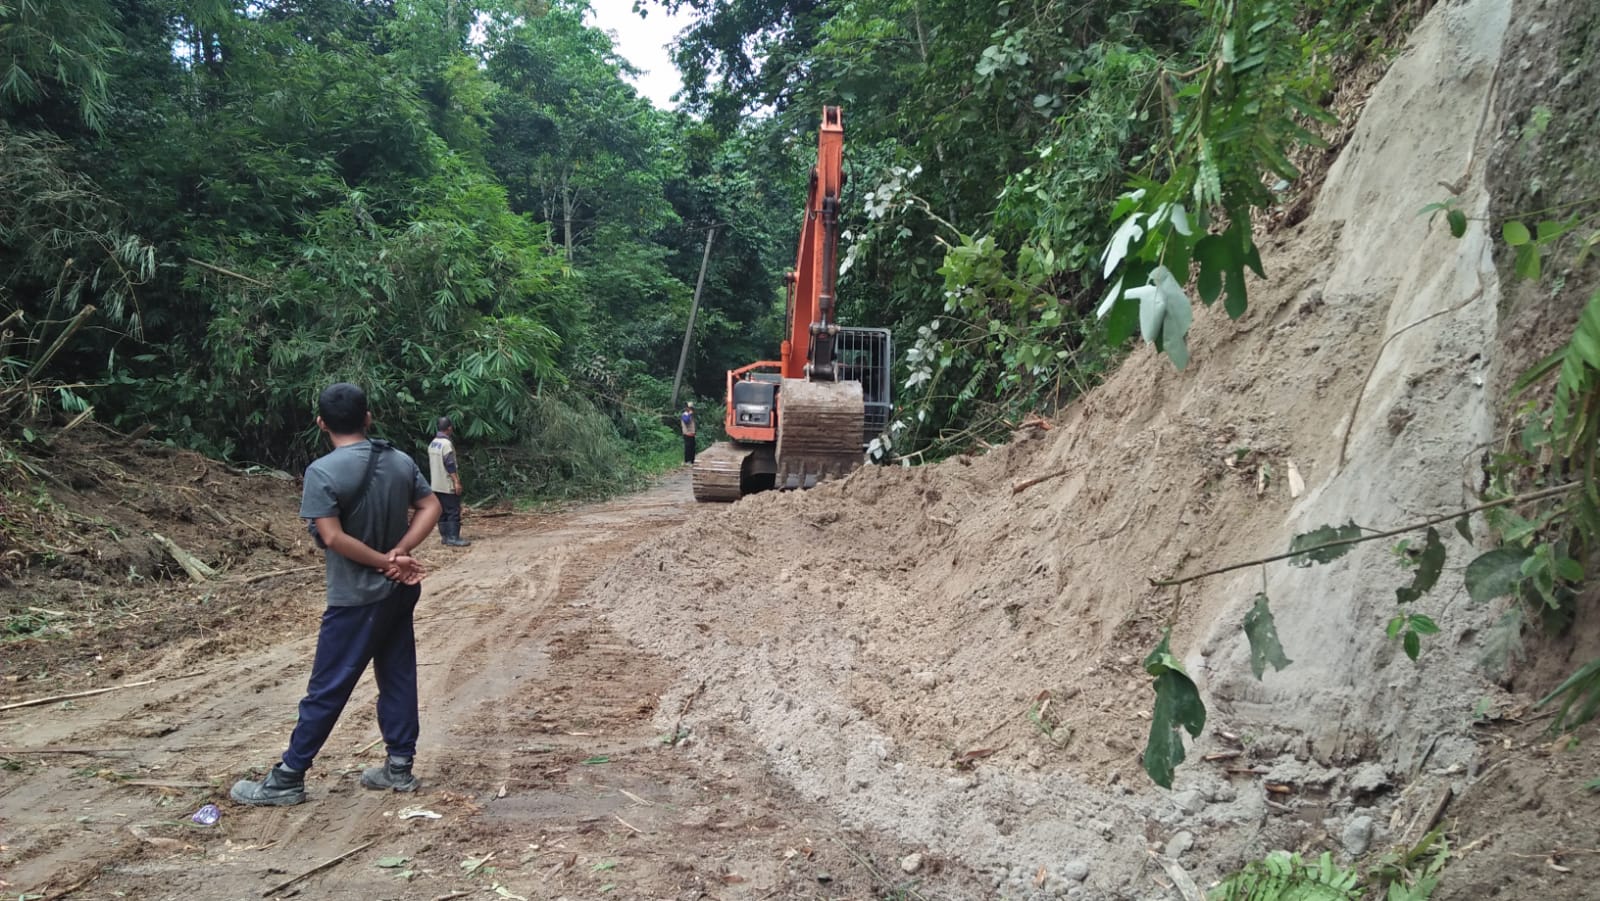 Turunkan Alat Berat Bersihkan Material Longsor di Desa Tanjung Iman